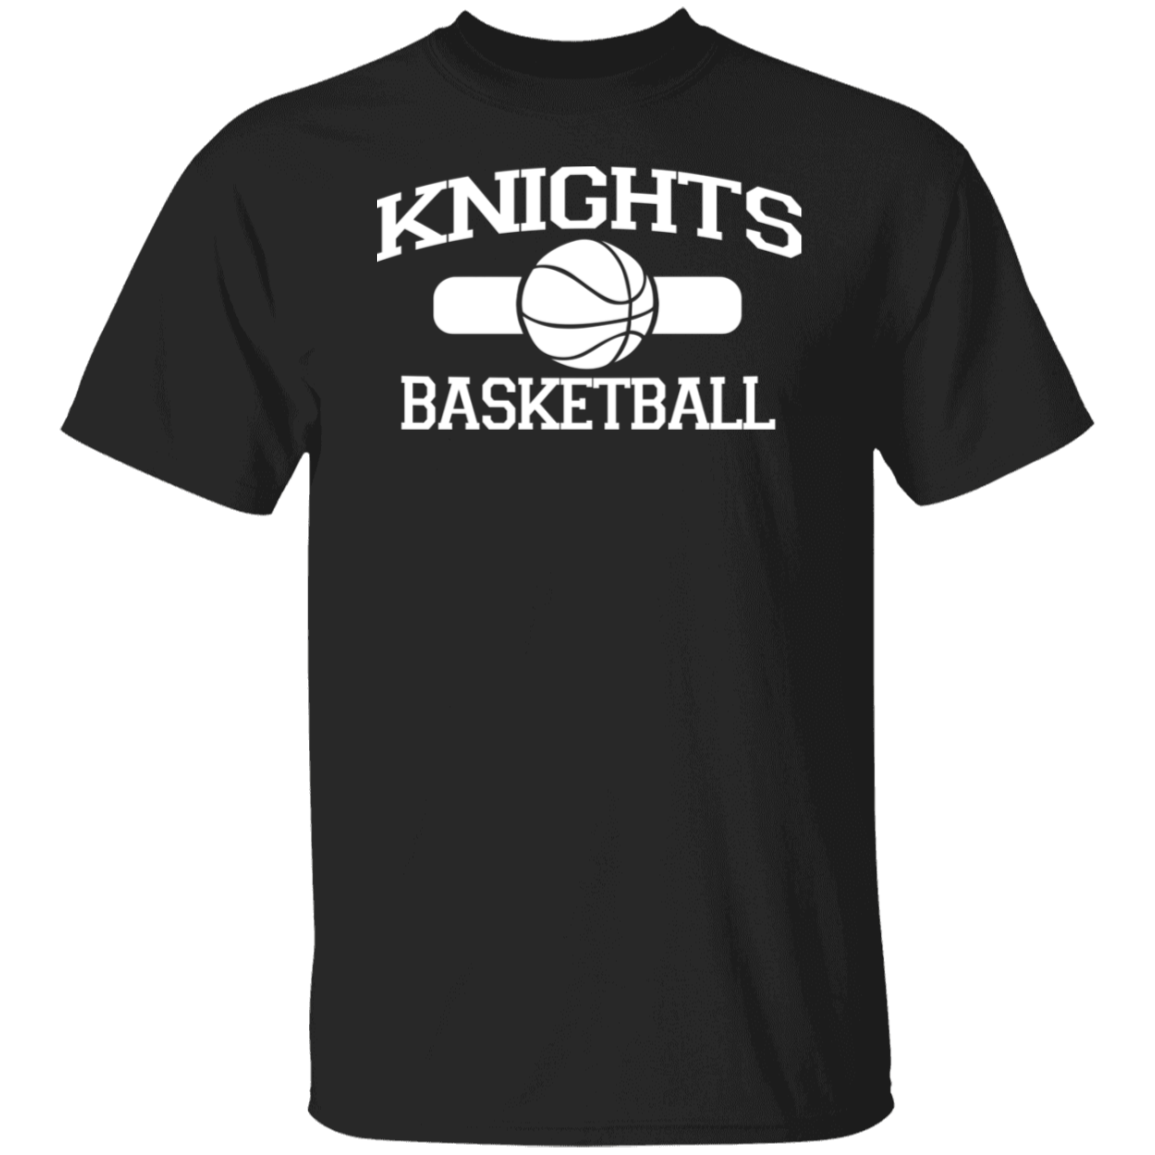 Knights Basketball White Print T-Shirt